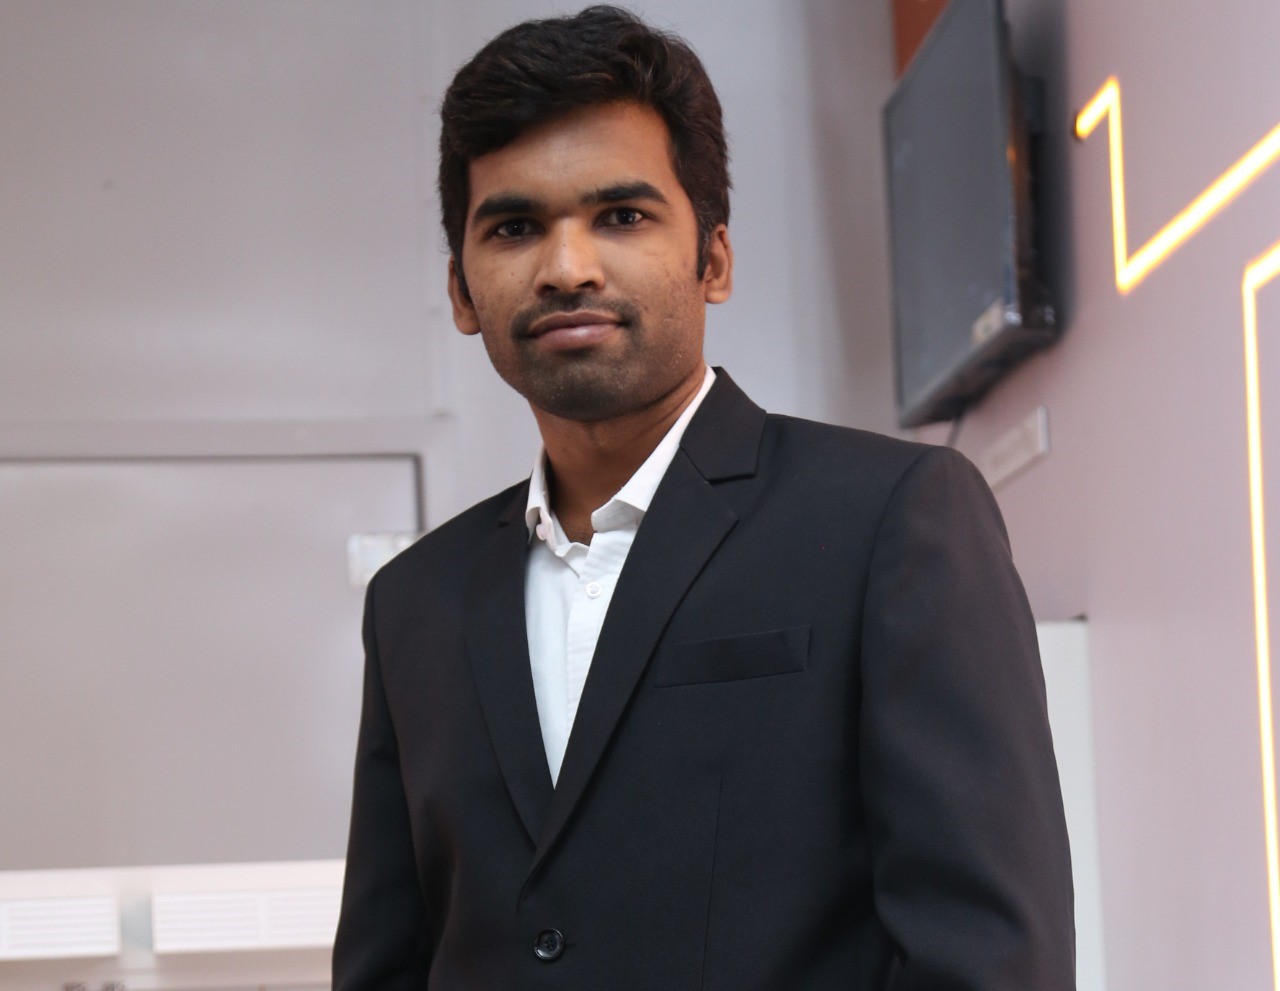 Gundurao MR, <span>Technical Manager & EV specialist, FIMER India</span>